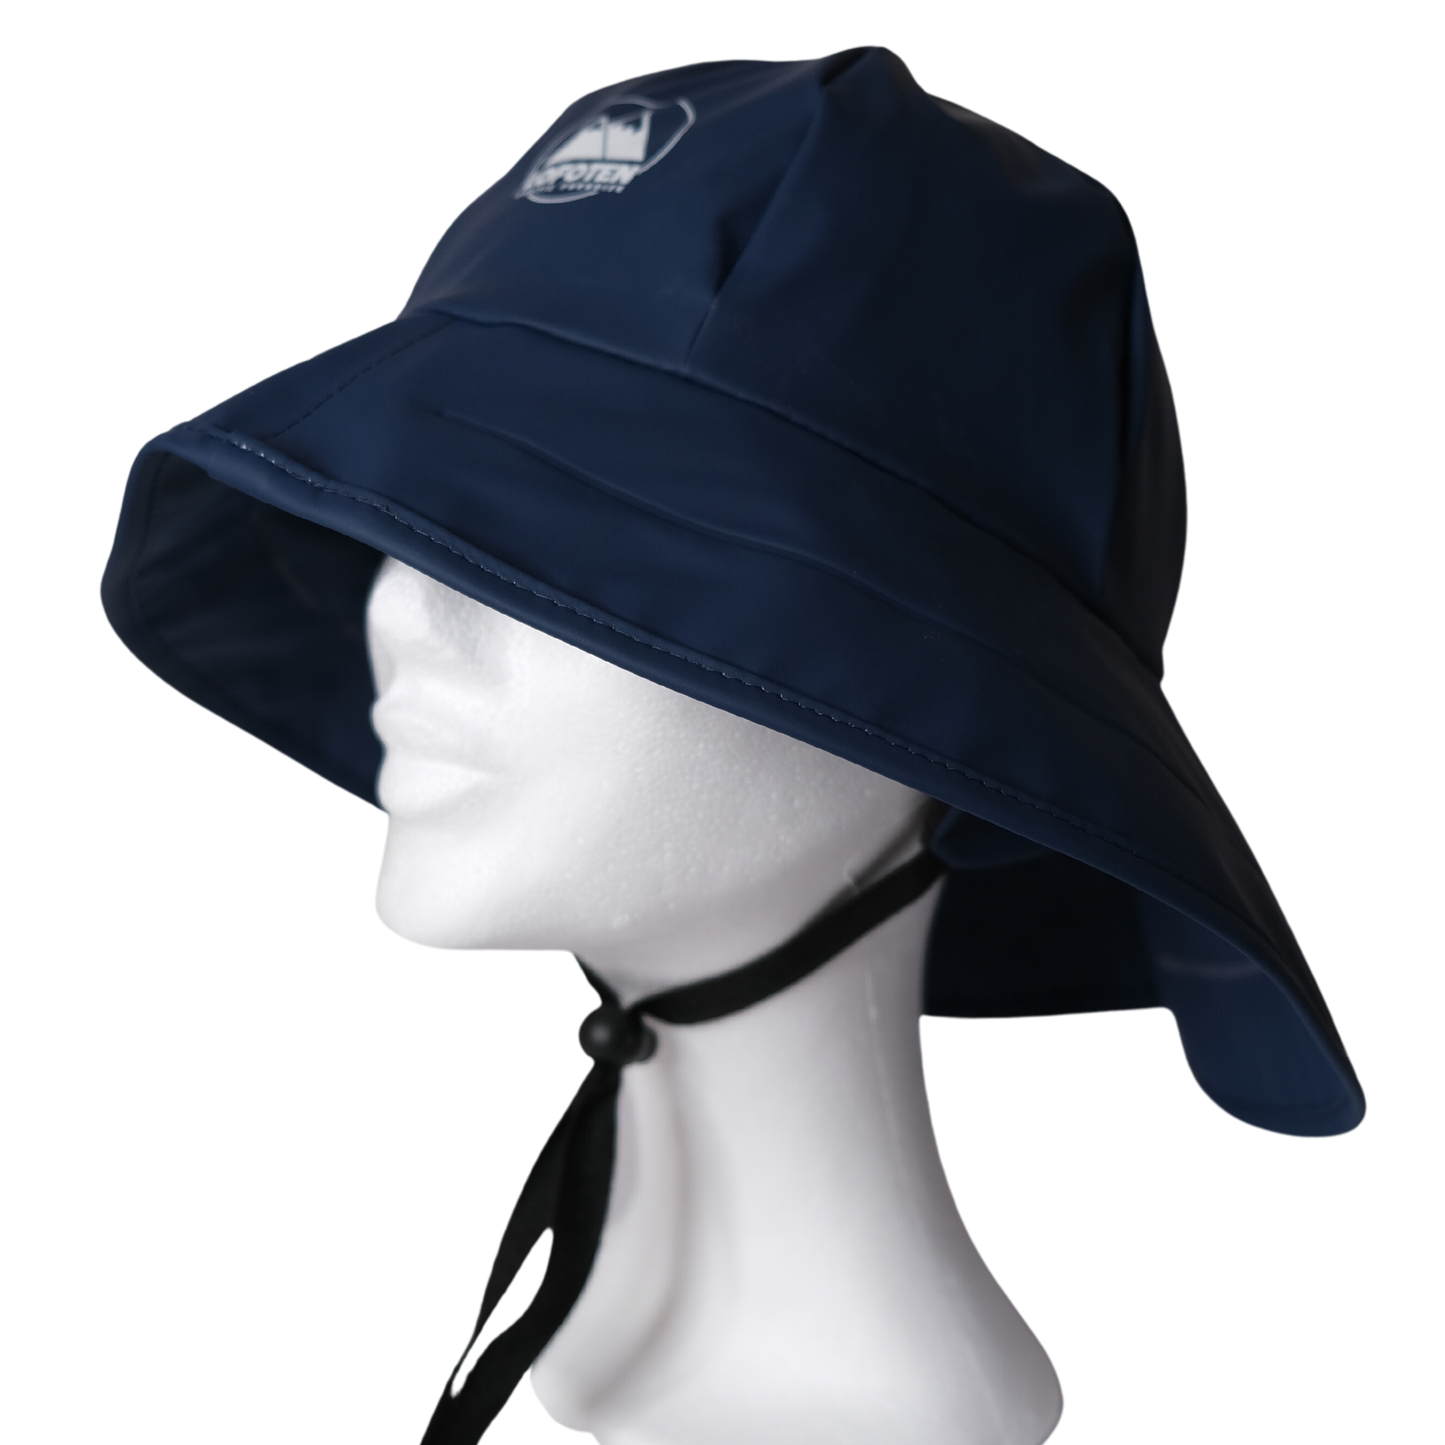 Blue sydvest / rain hat from Lofoten